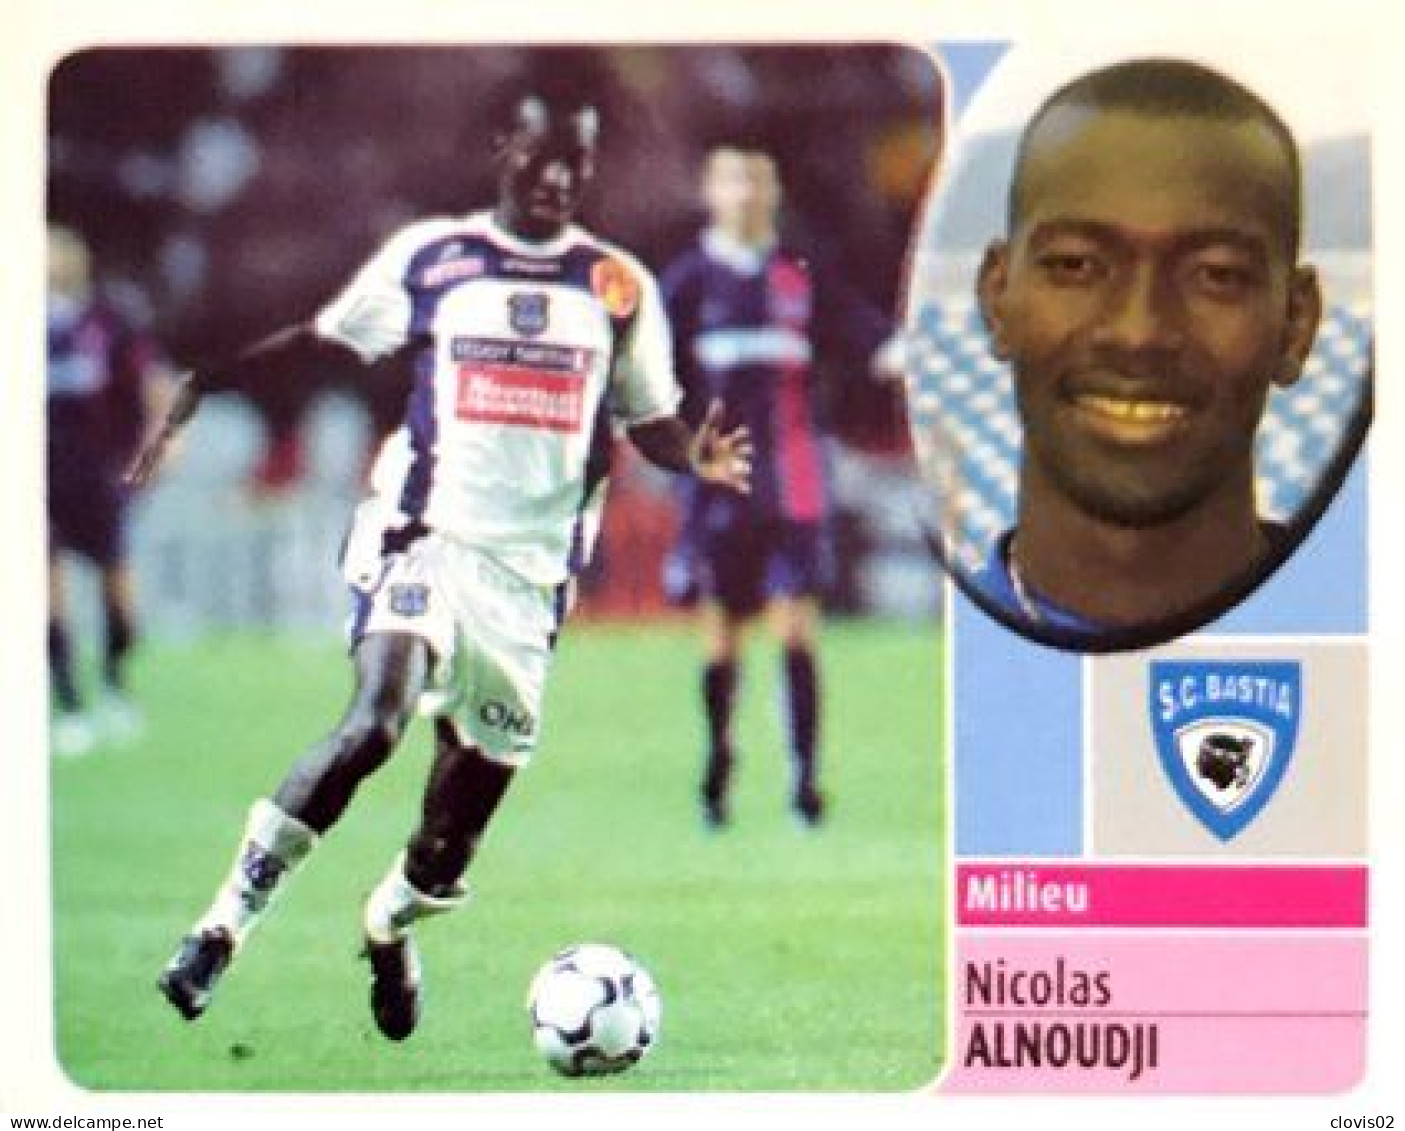 36 Nicolas Alnoudji - SC Bastia - Panini France Foot 2003 Sticker Vignette - Edition Française